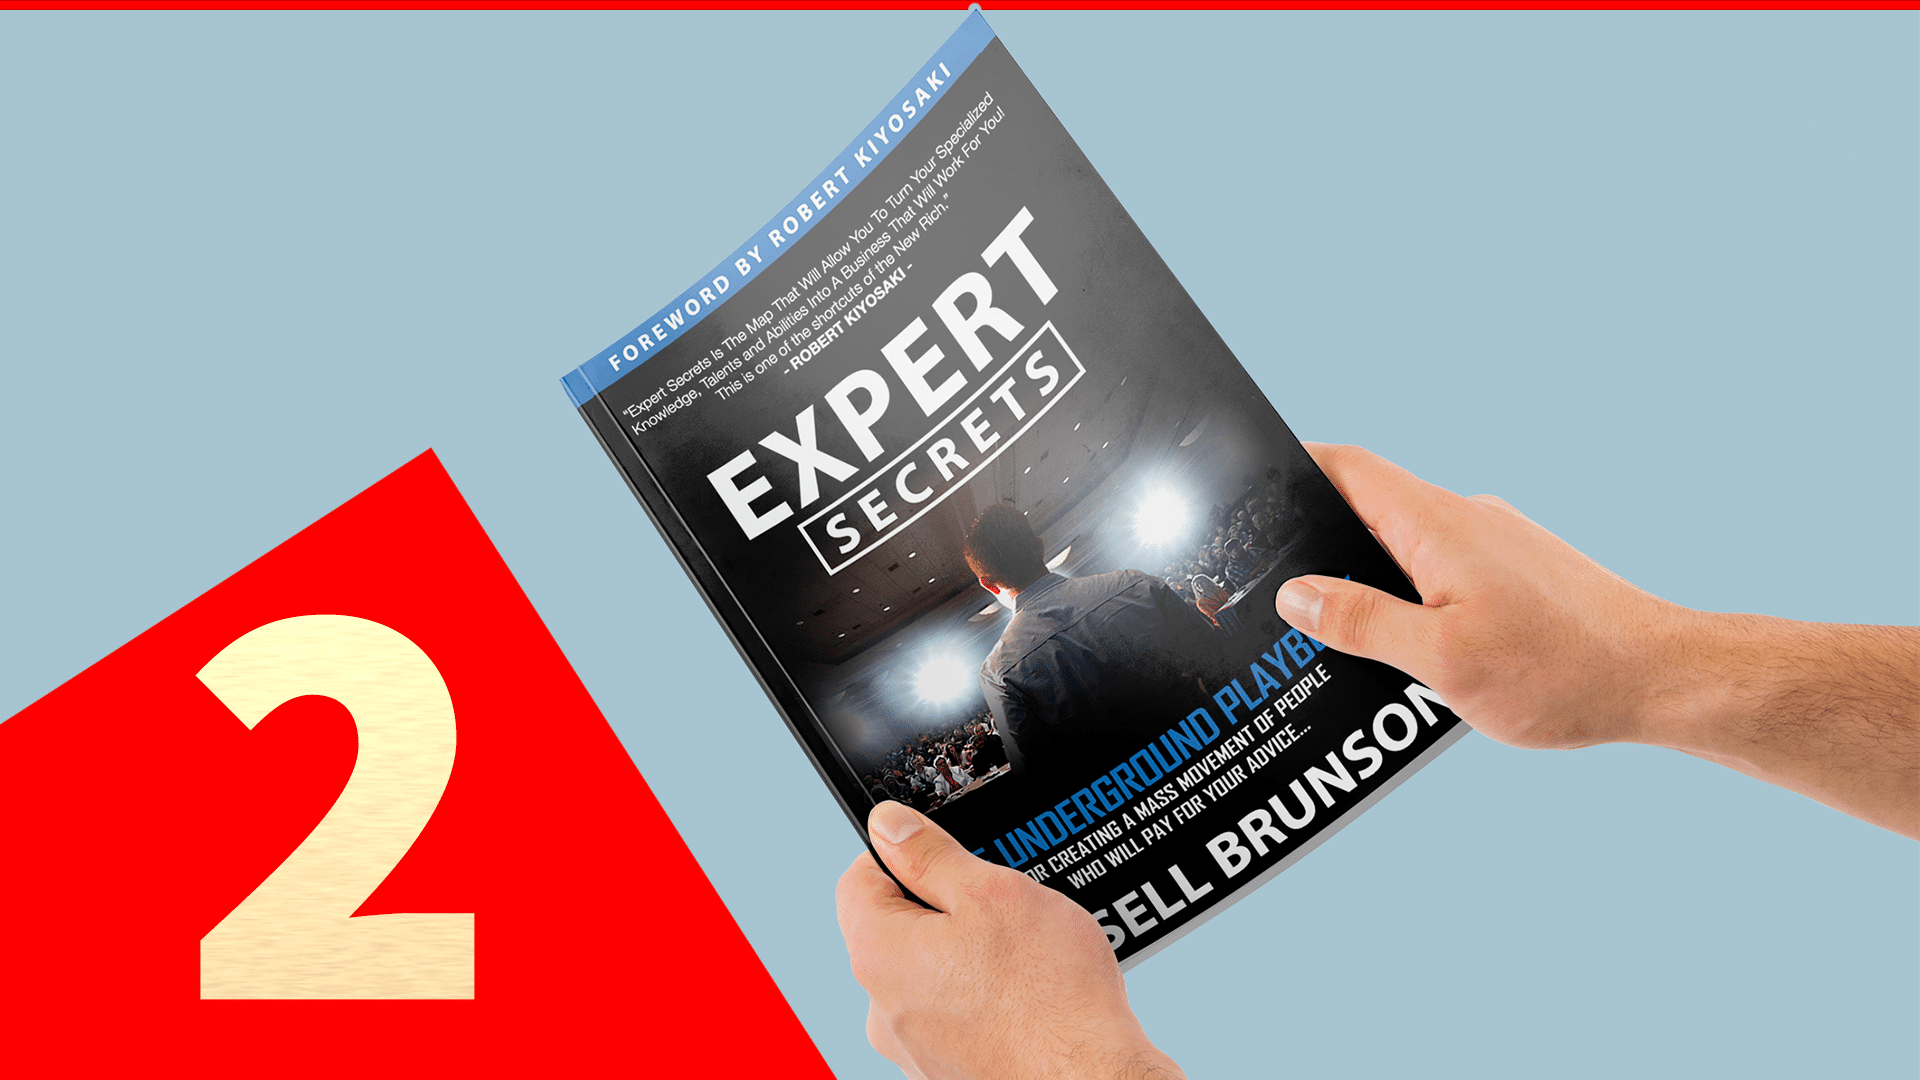 expert secrets book pdf